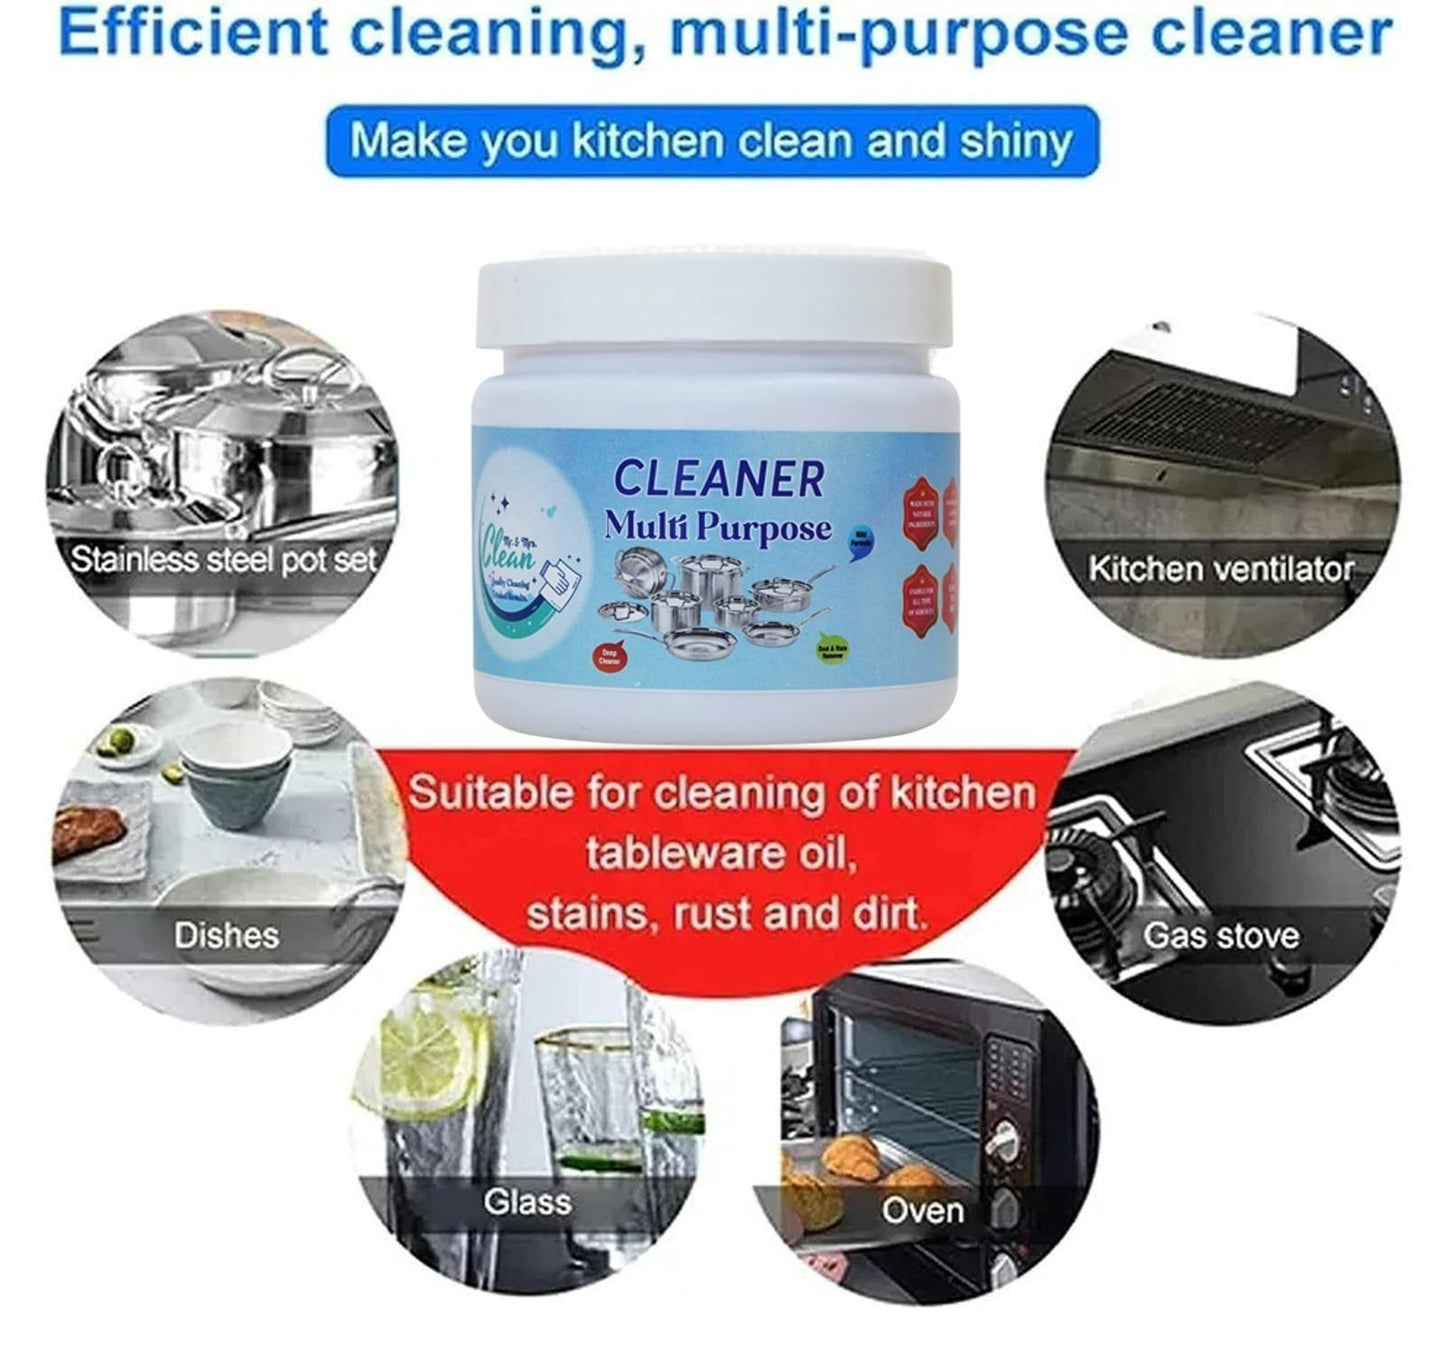 Multipurpose Cleaner Soak To Clean Greasy Dirt (Pack of 2)